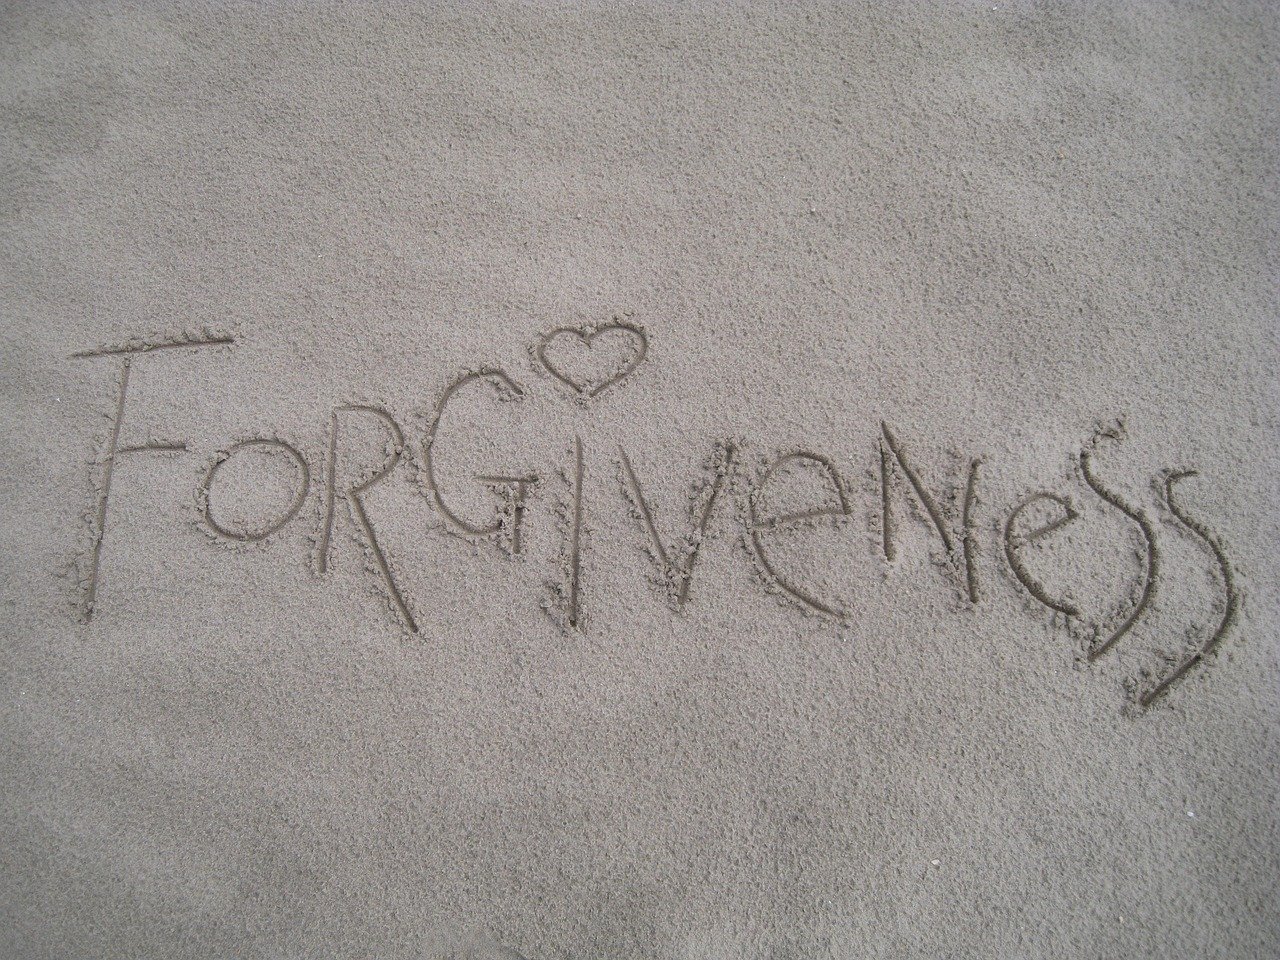 forgiveness written in sand